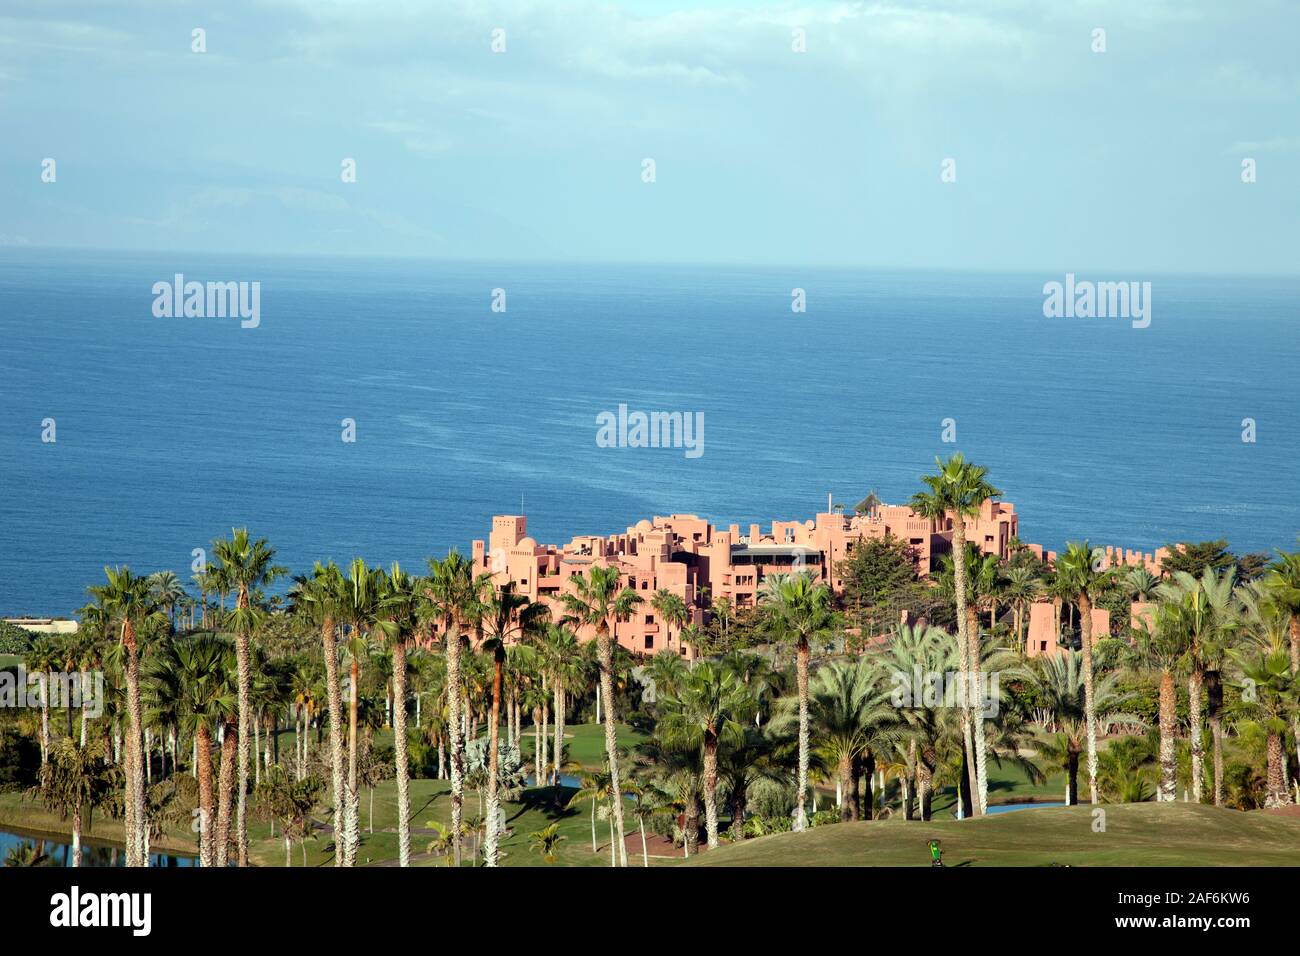 Ritz-Carlton Hotel, 5 star hotel, Tenerife, Canary Islands Stock Photo